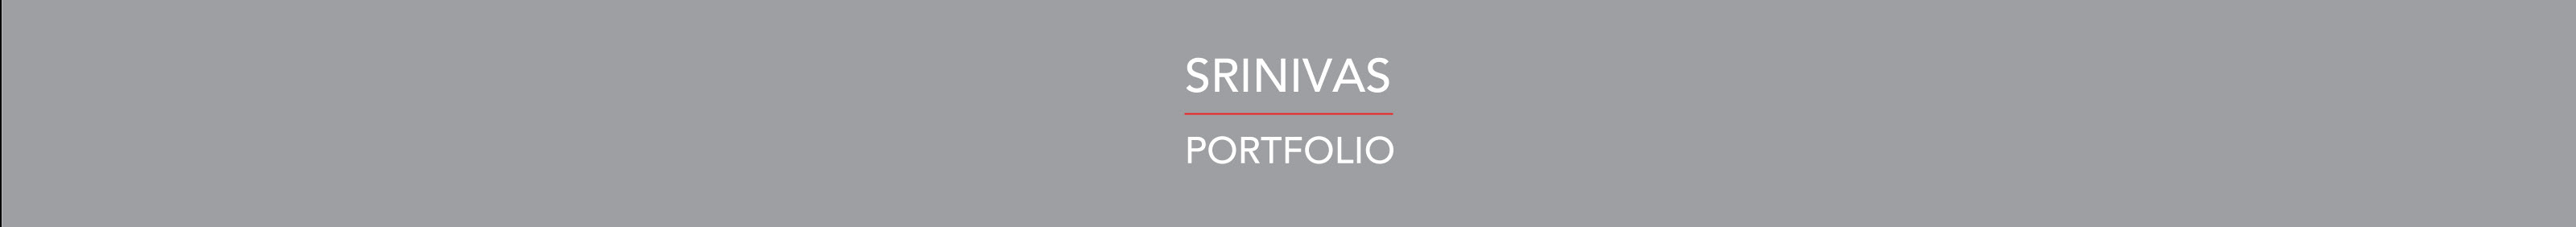 P V Srinivas profil başlığı